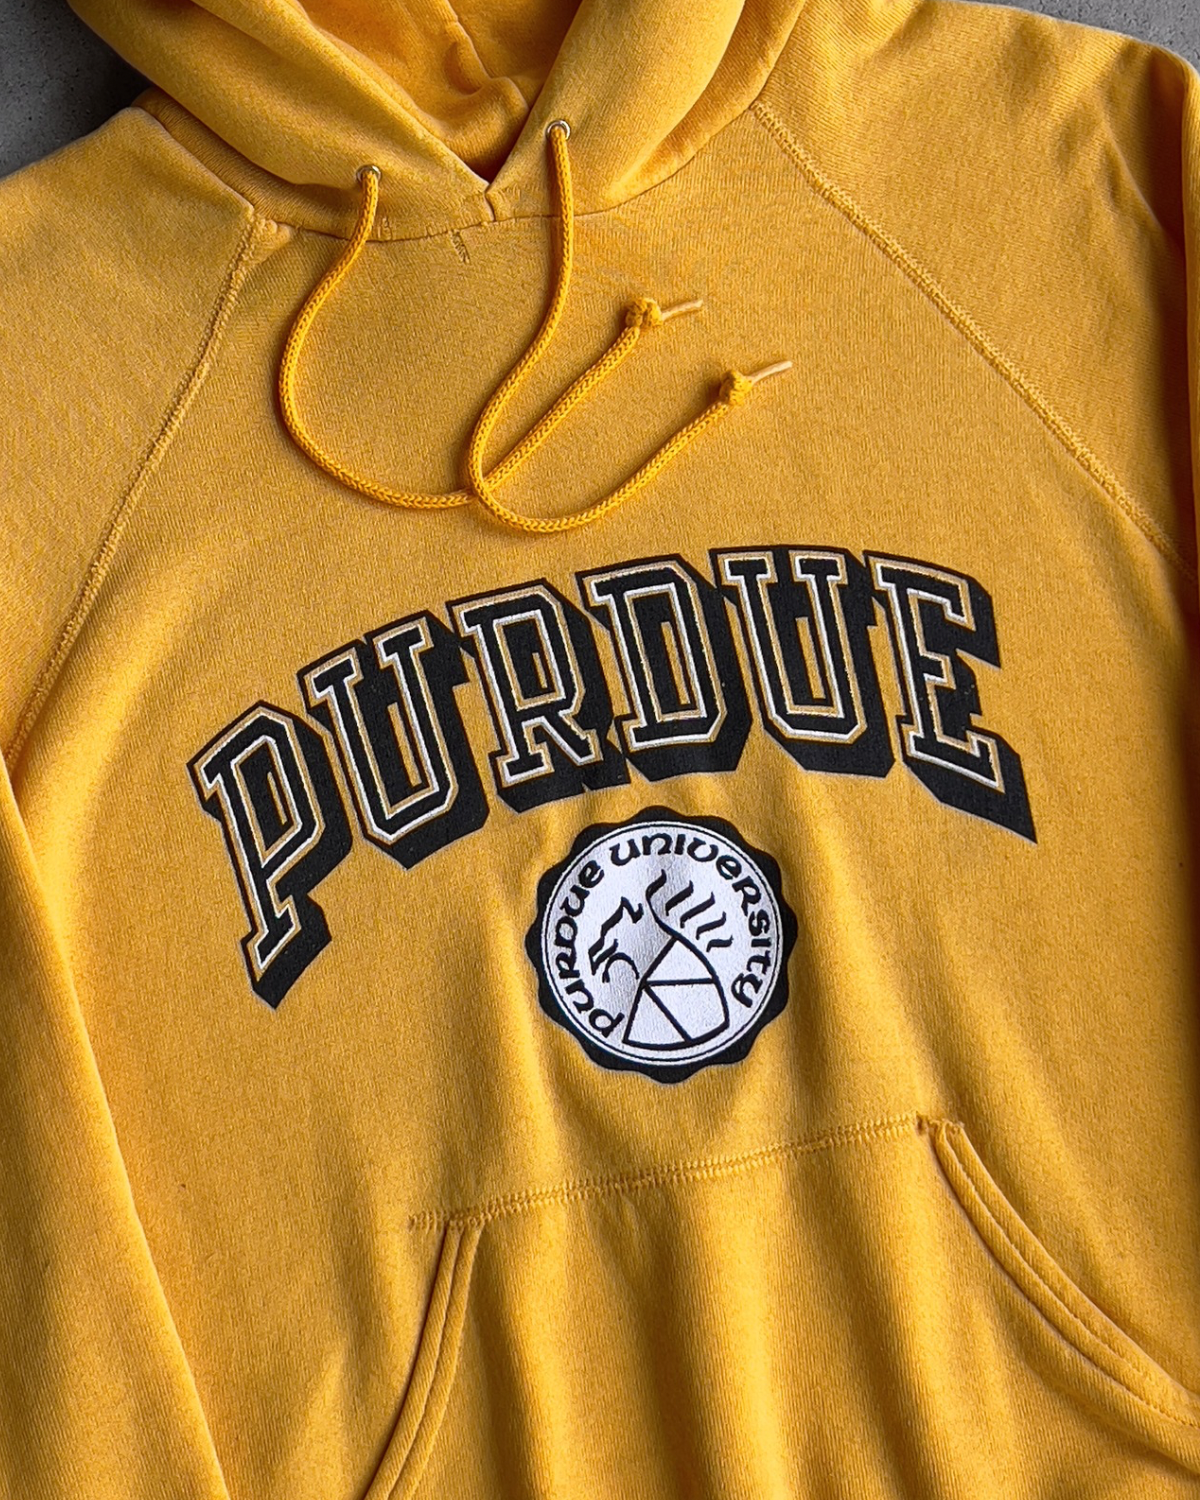 Vintage 1970s Purdue University Yellow Raglan Hoodie  - Shop ThreadCount Vintage Co.